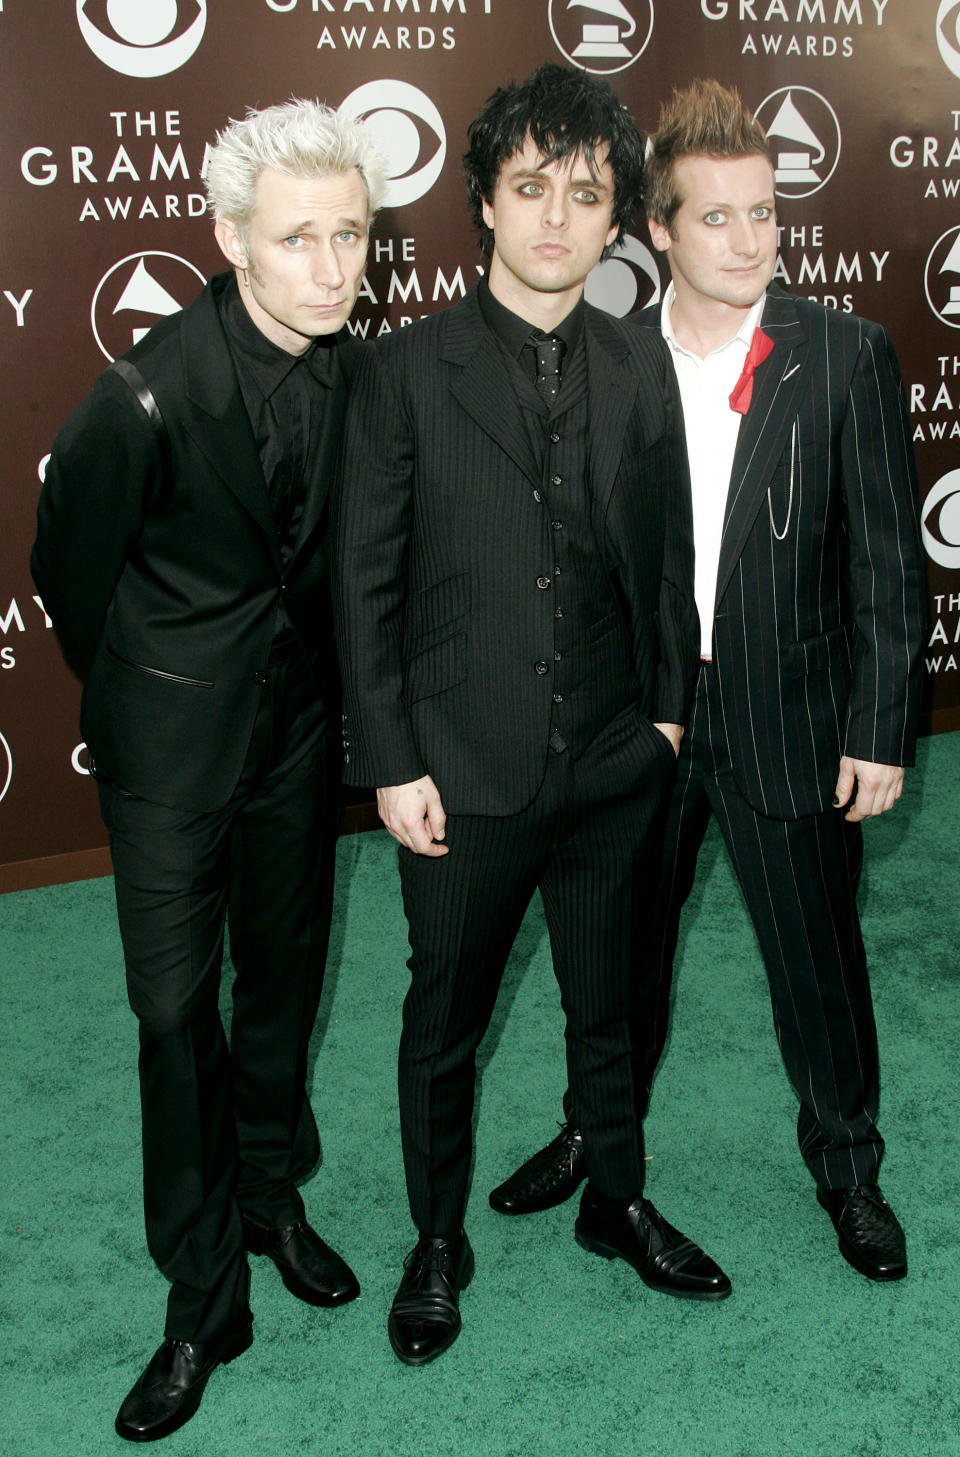 2005: Green Day